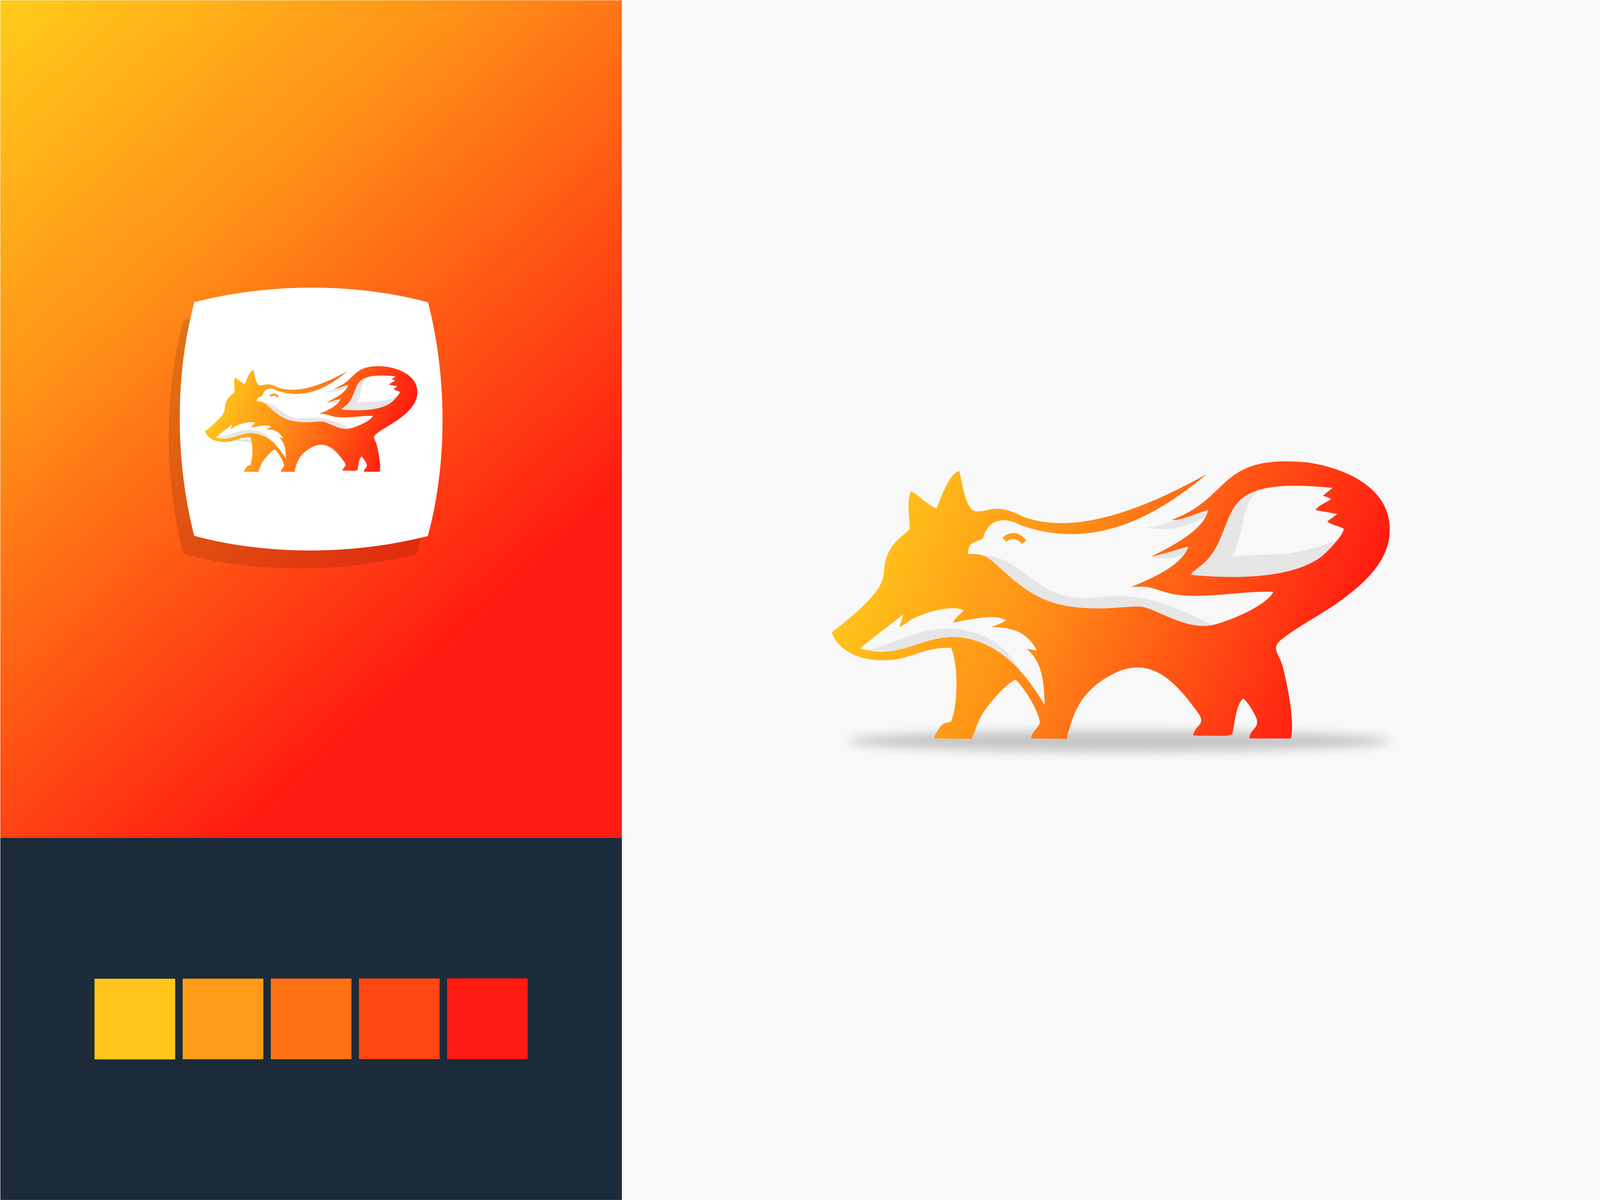 Fox and bird logo by Akdesain on Dribbble